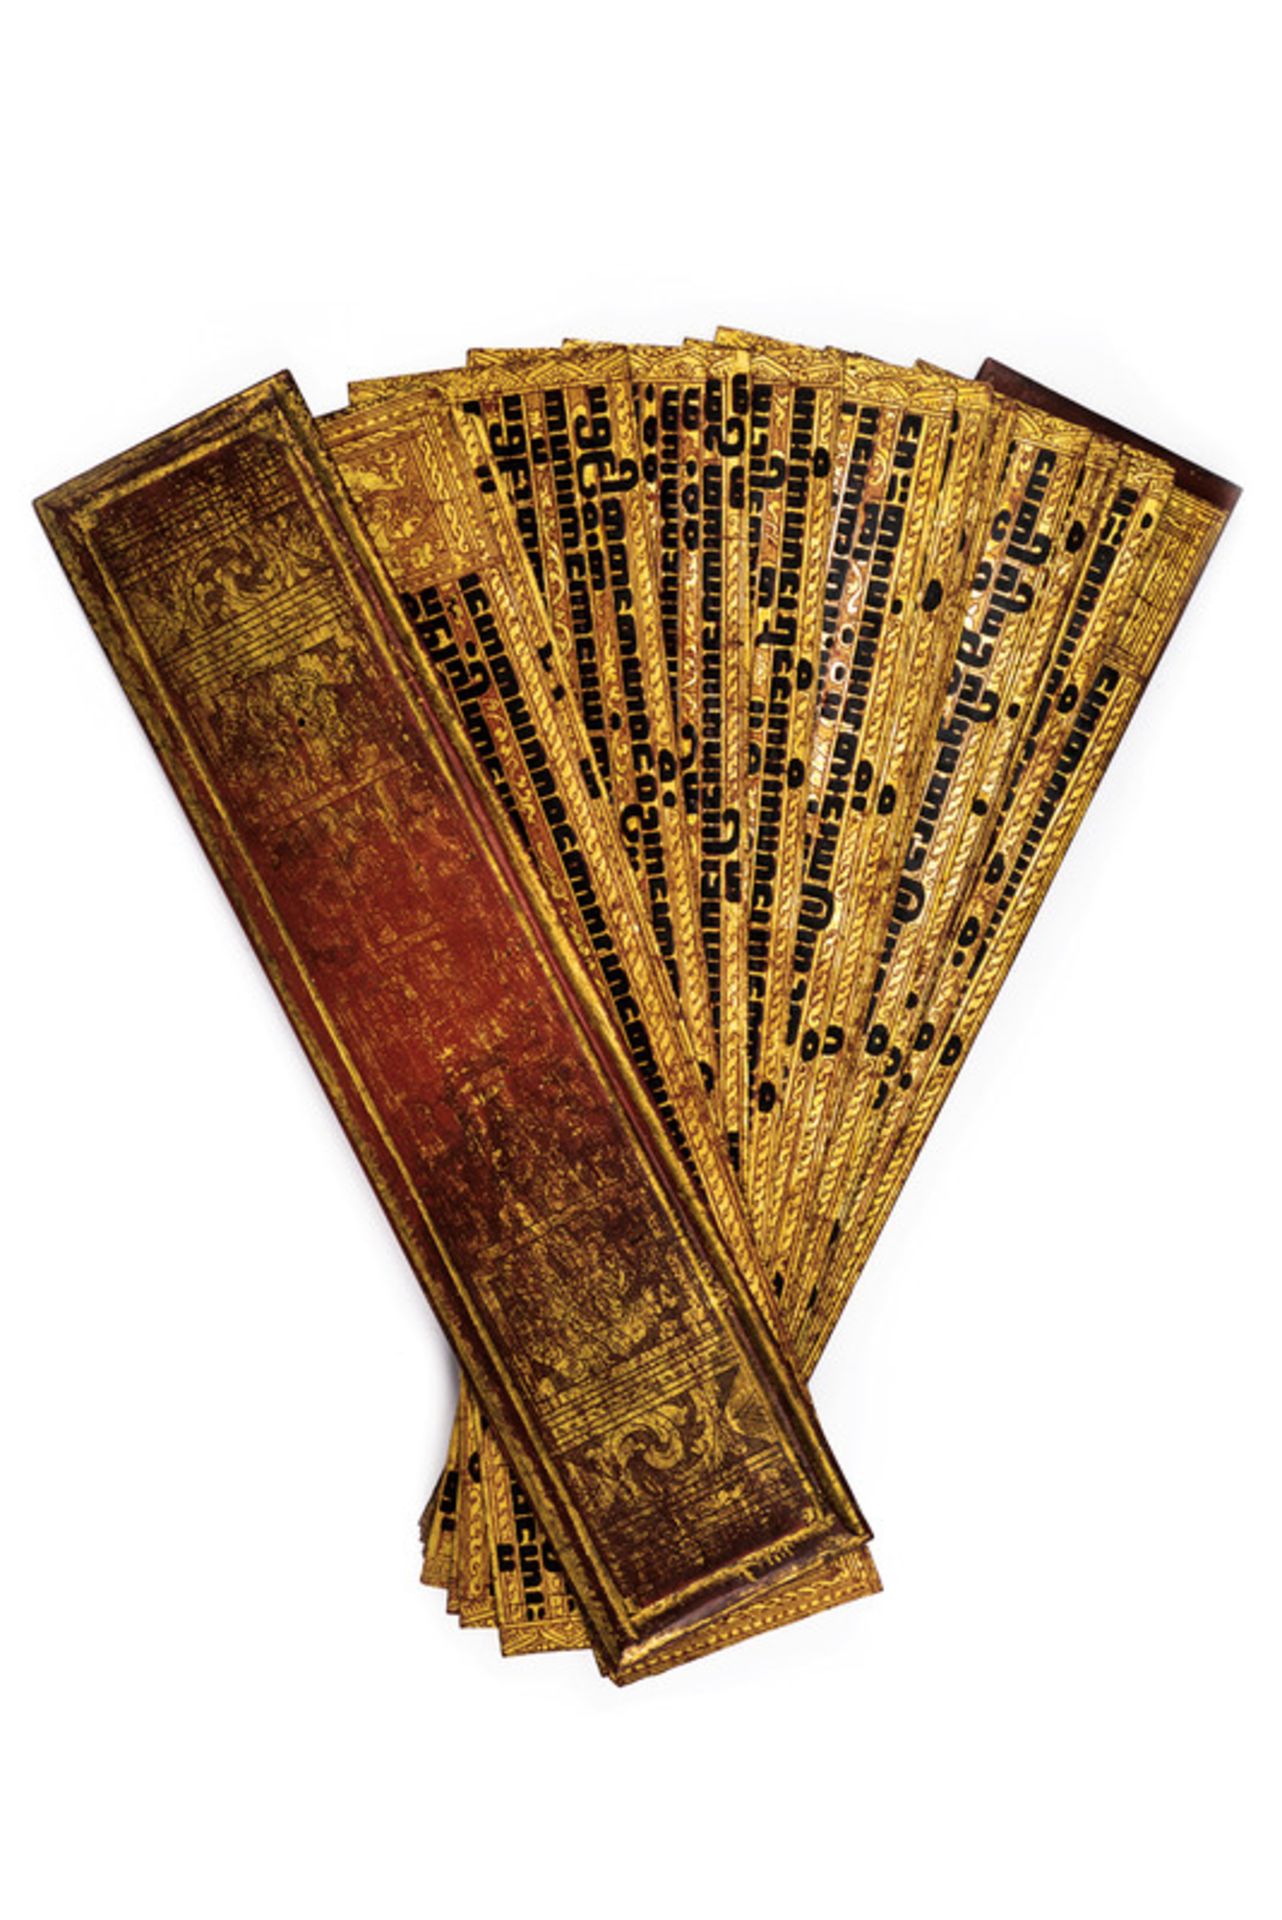 A scarce Buddhist manuscript